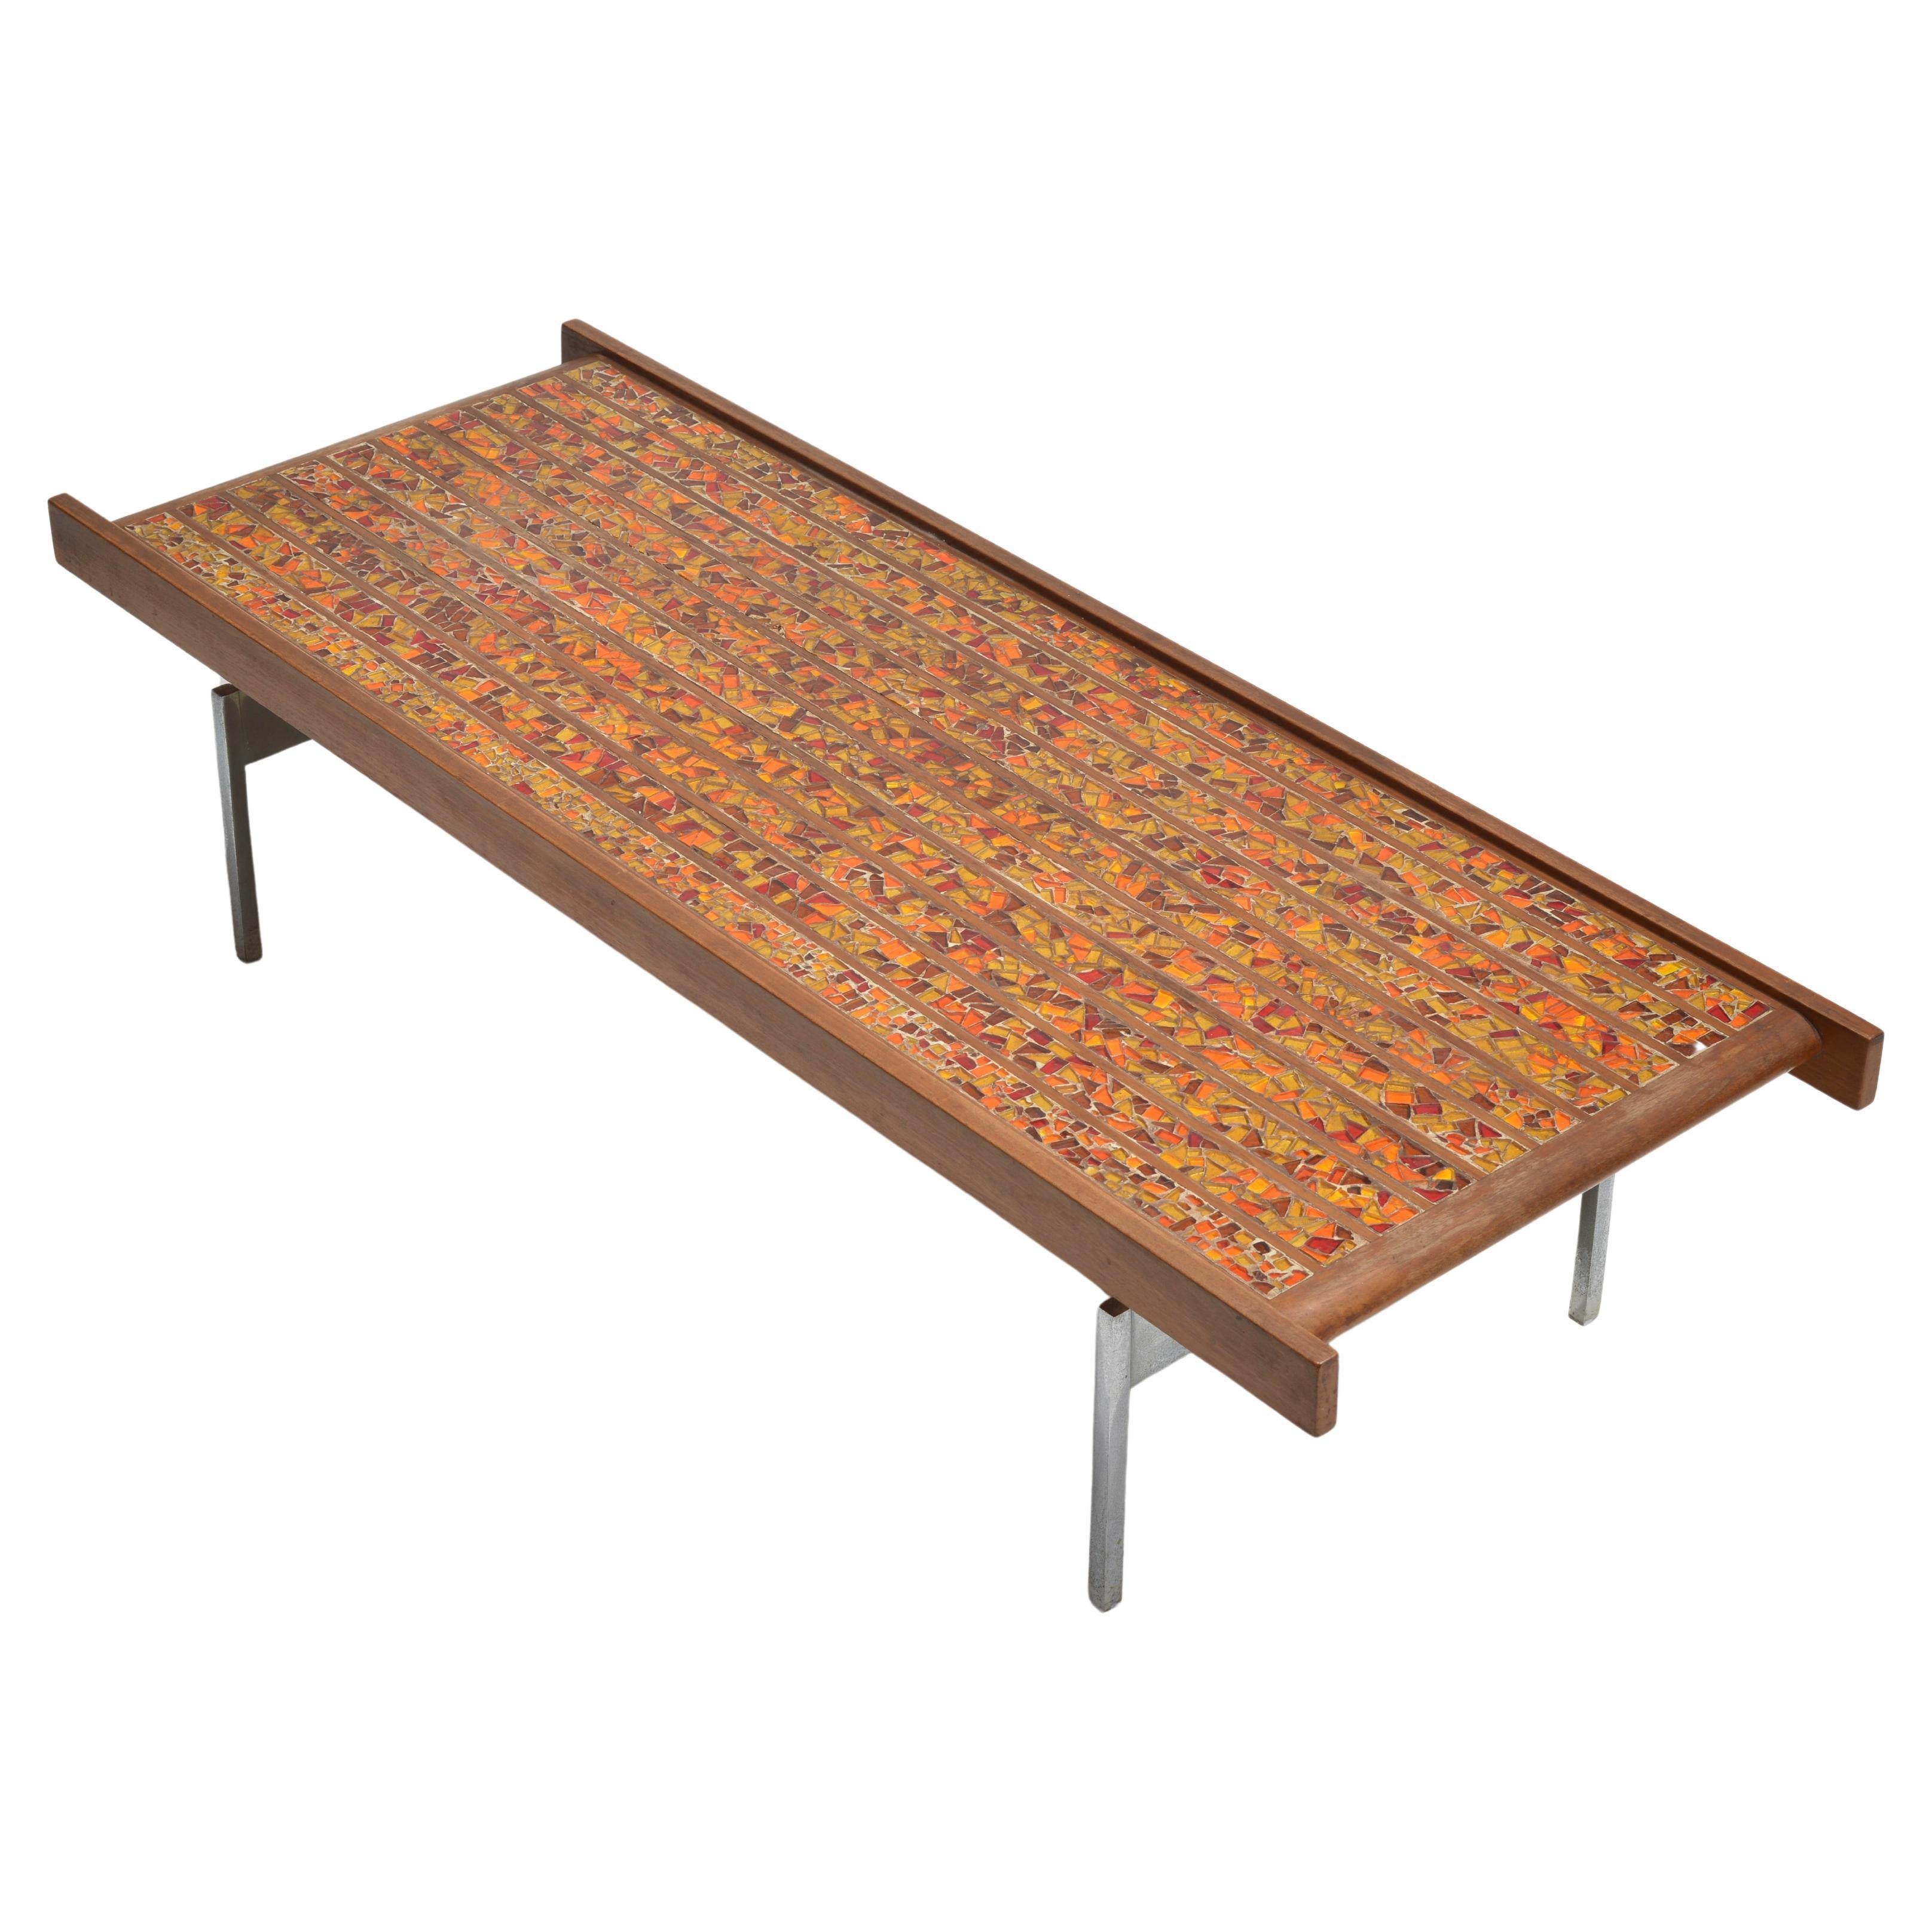 Table basse rectangulaire moderniste en tuiles, Wood Wood et chrome